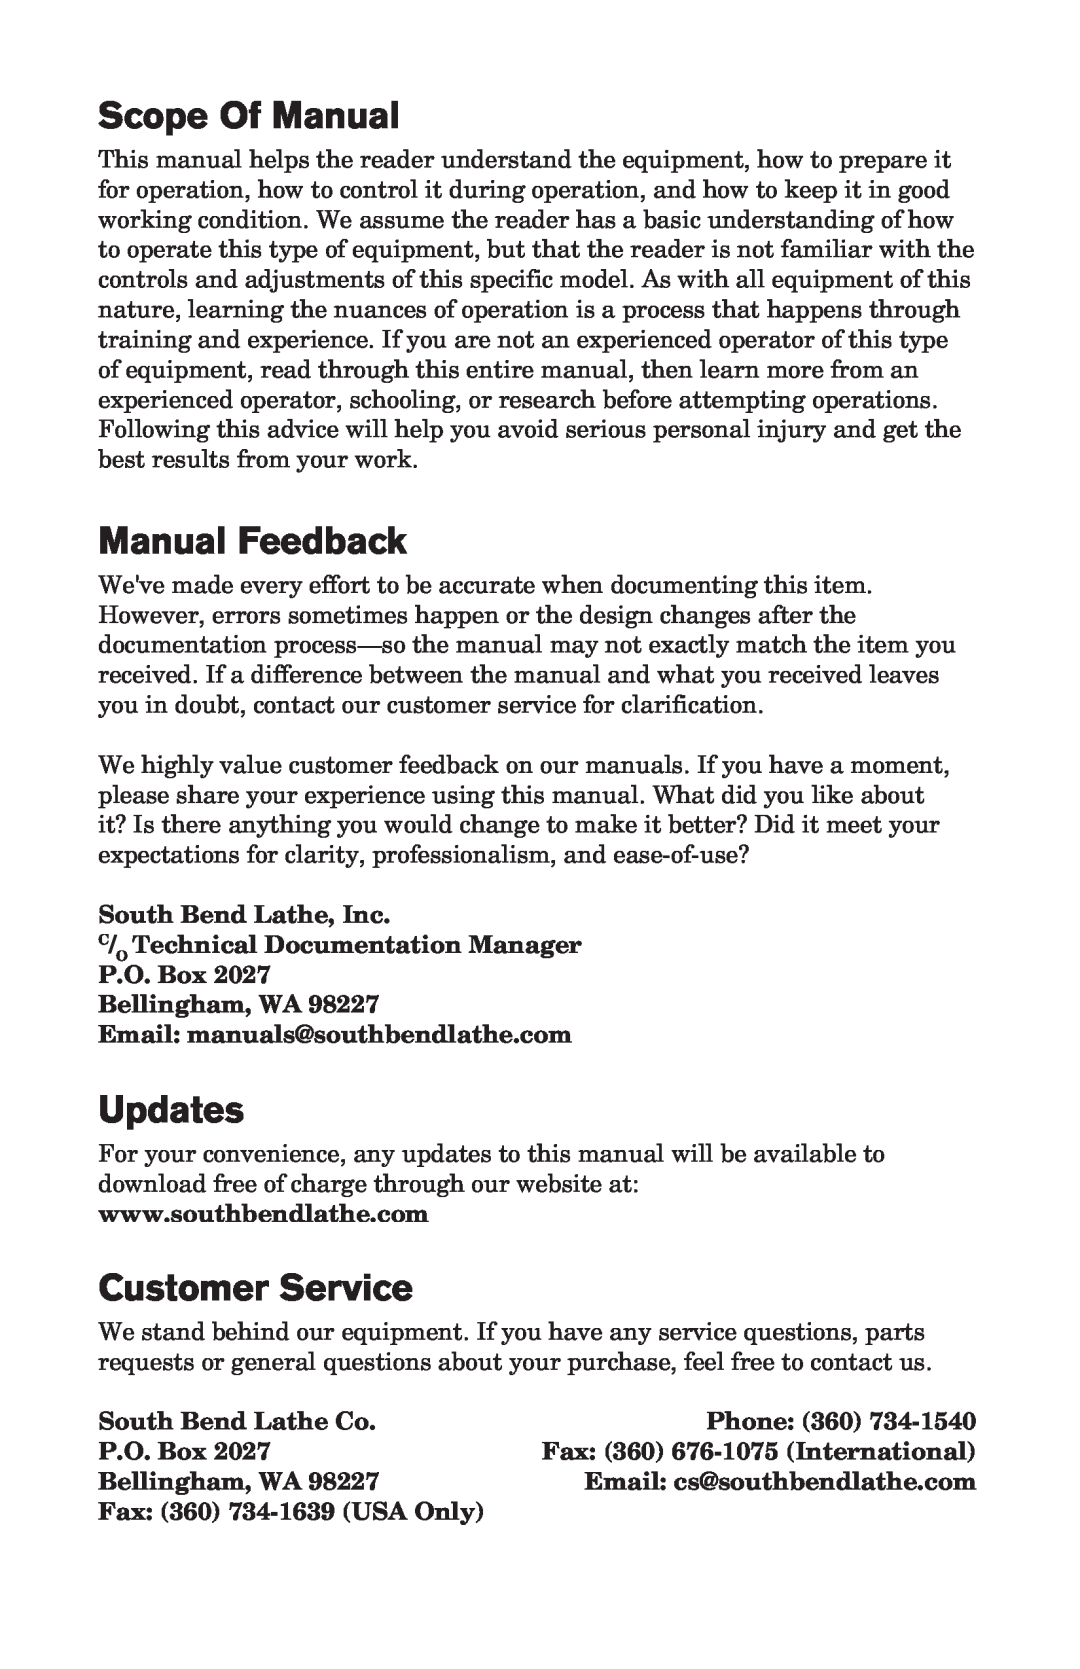 Southbend SB Scope Of Manual, Manual Feedback, Updates, Customer Service, Bellingham, WA Email manuals@southbendlathe.com 